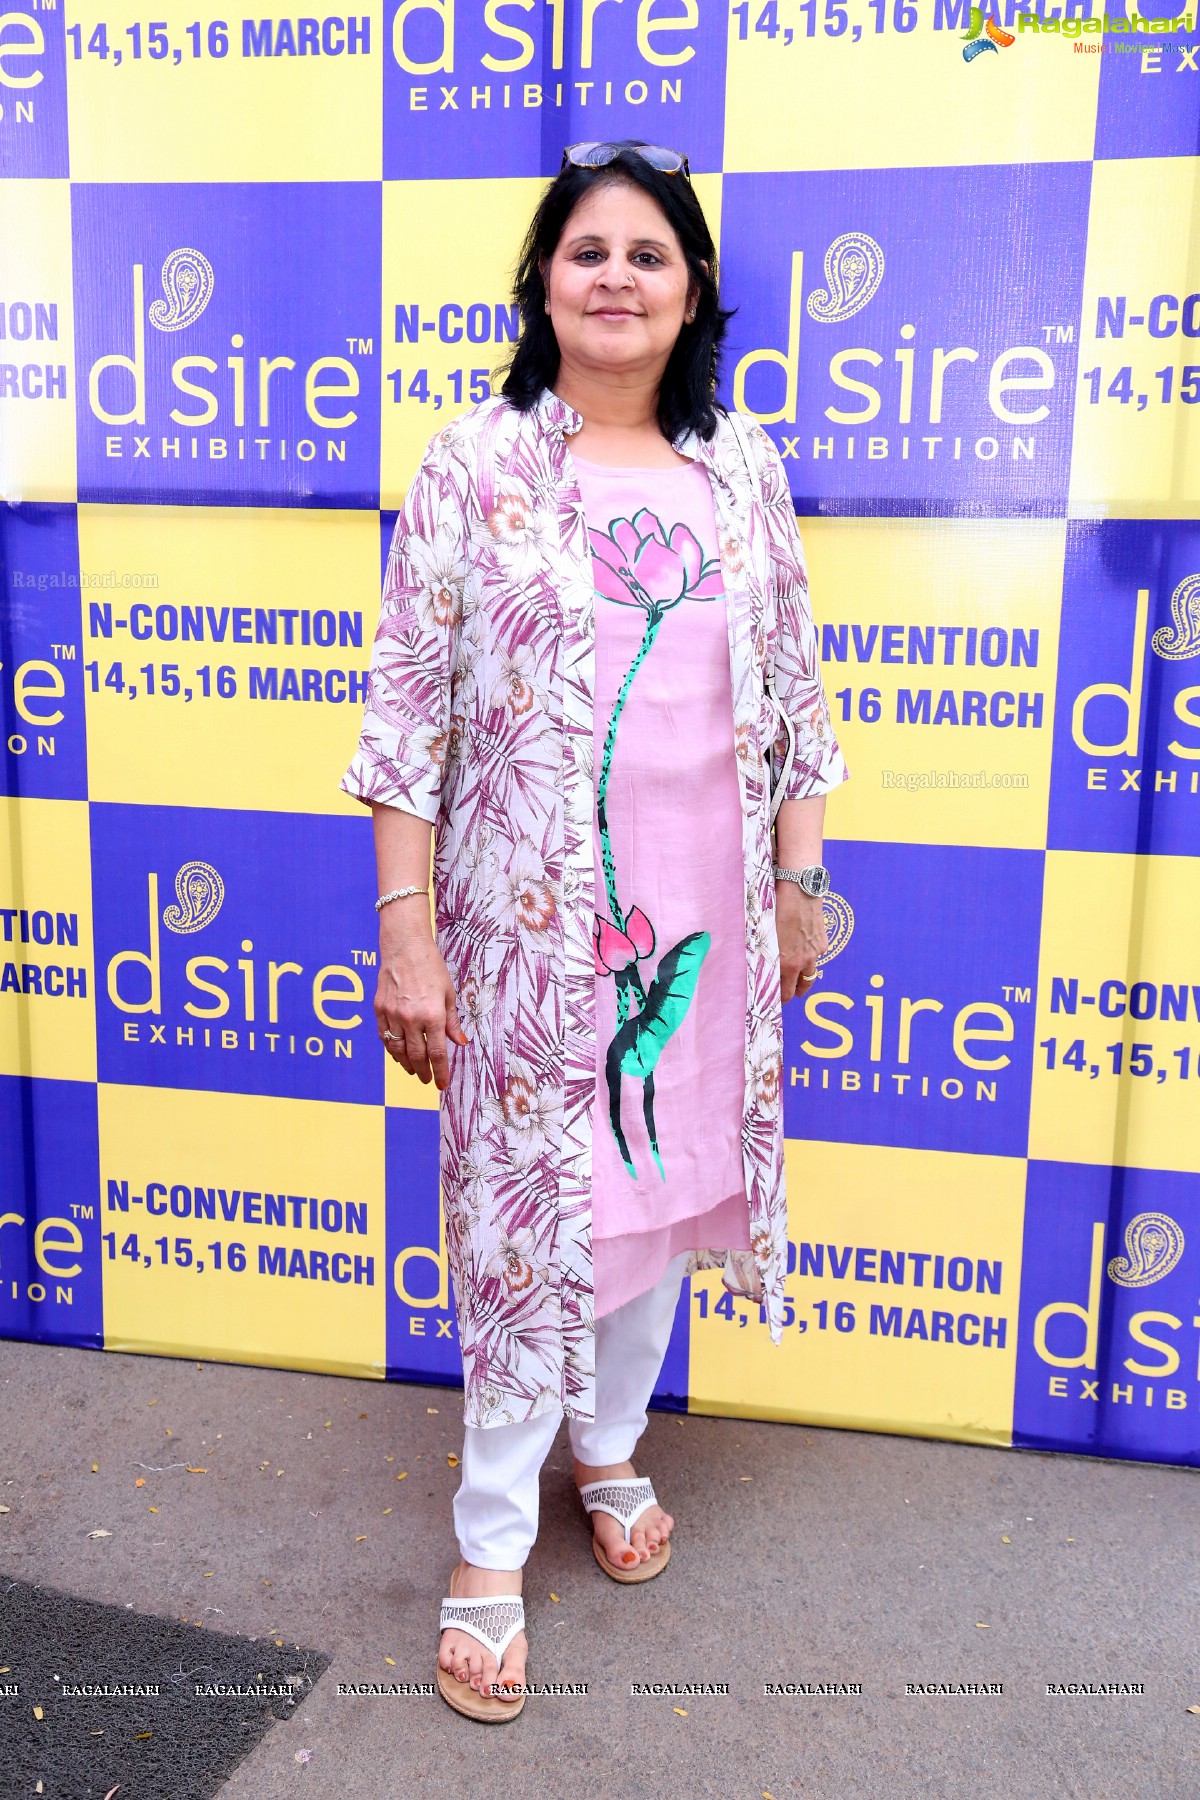 Desire Designer Exhibition inaguarated by Sita Narayan